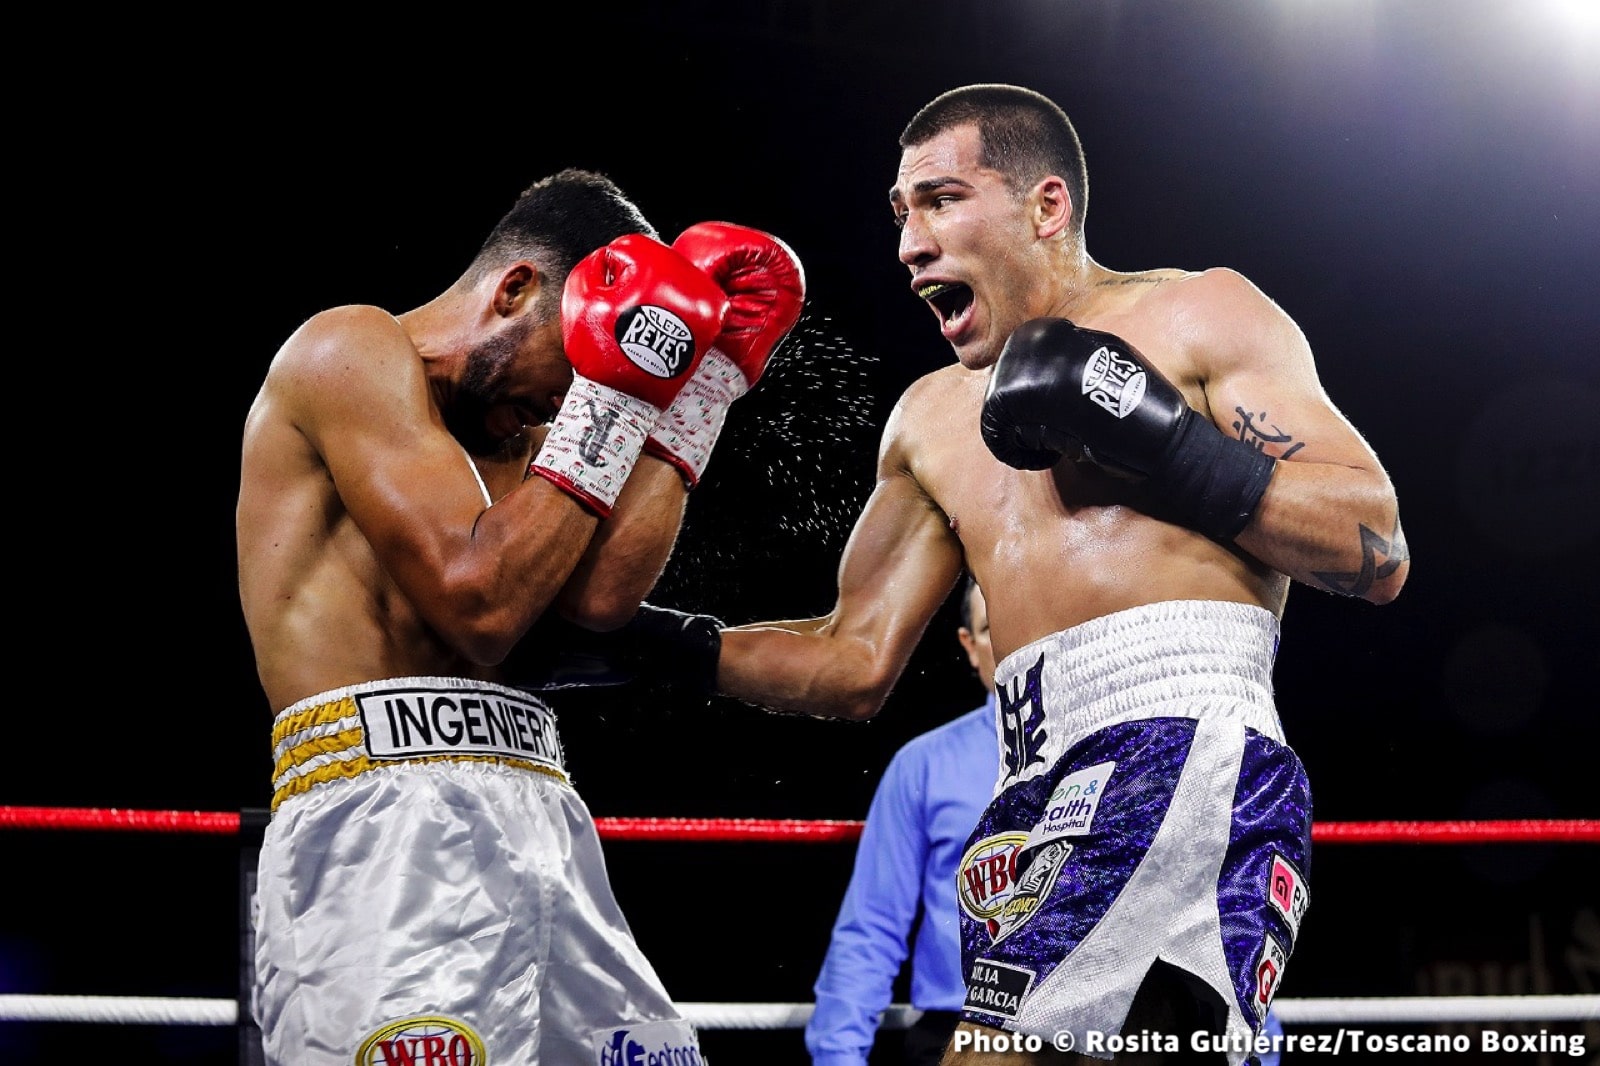 Damian Sosa boxing image / photo